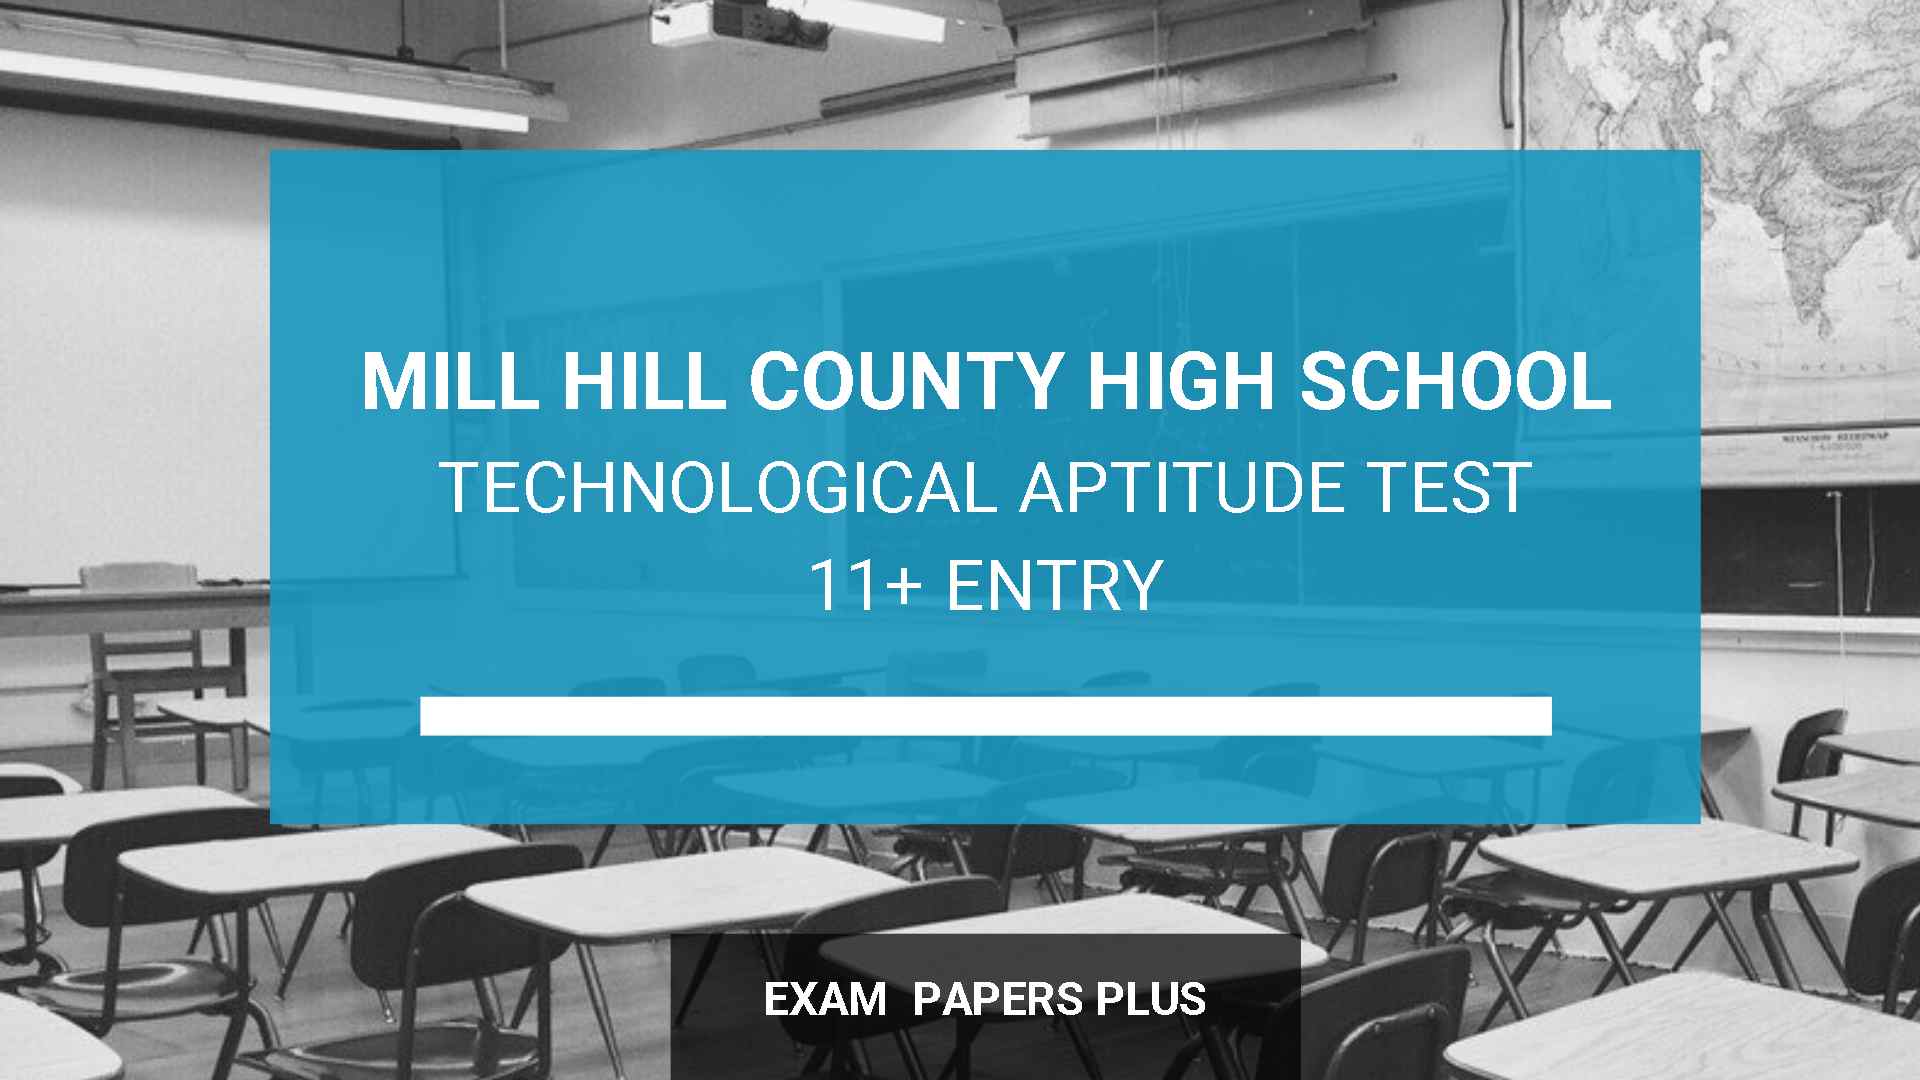 Mill Hill County High School 11 Plus Technological Aptitude Test